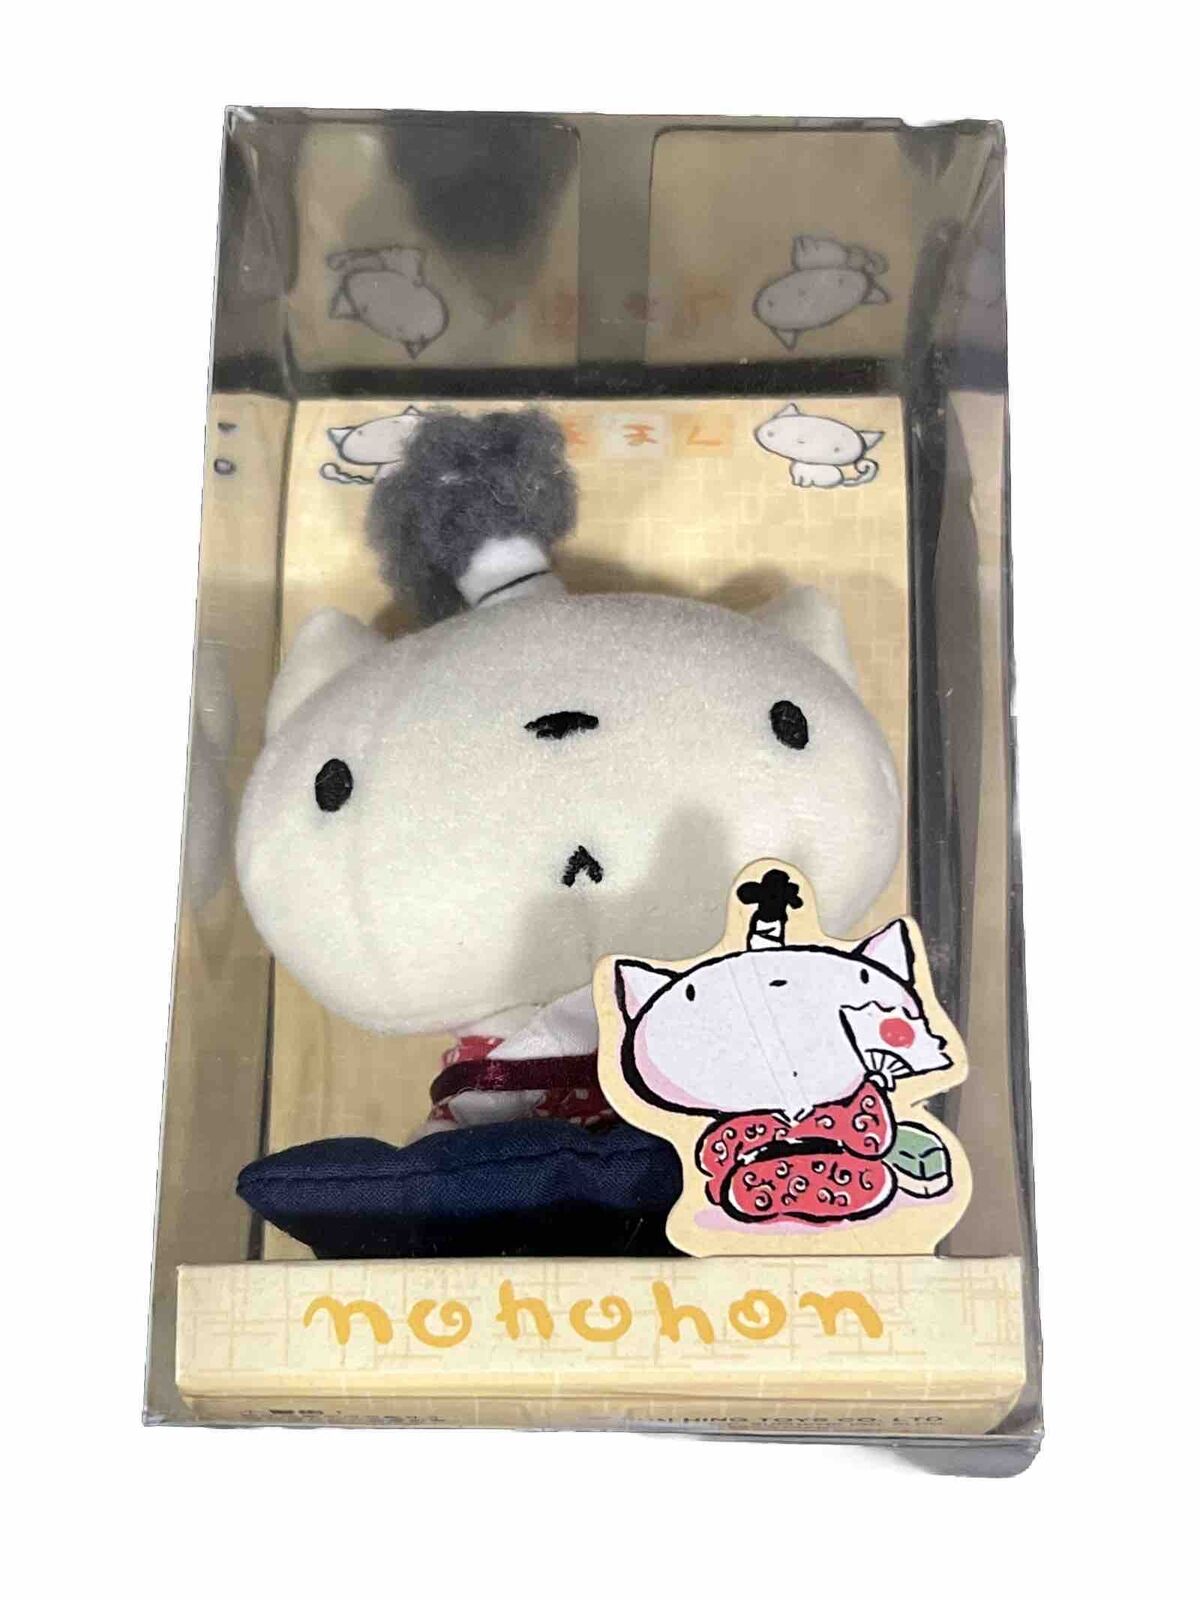 Nohohon Cat Kitty Geisha Fan Plush by Derami Green Camel- SUN HING TOYS CO. LTD.